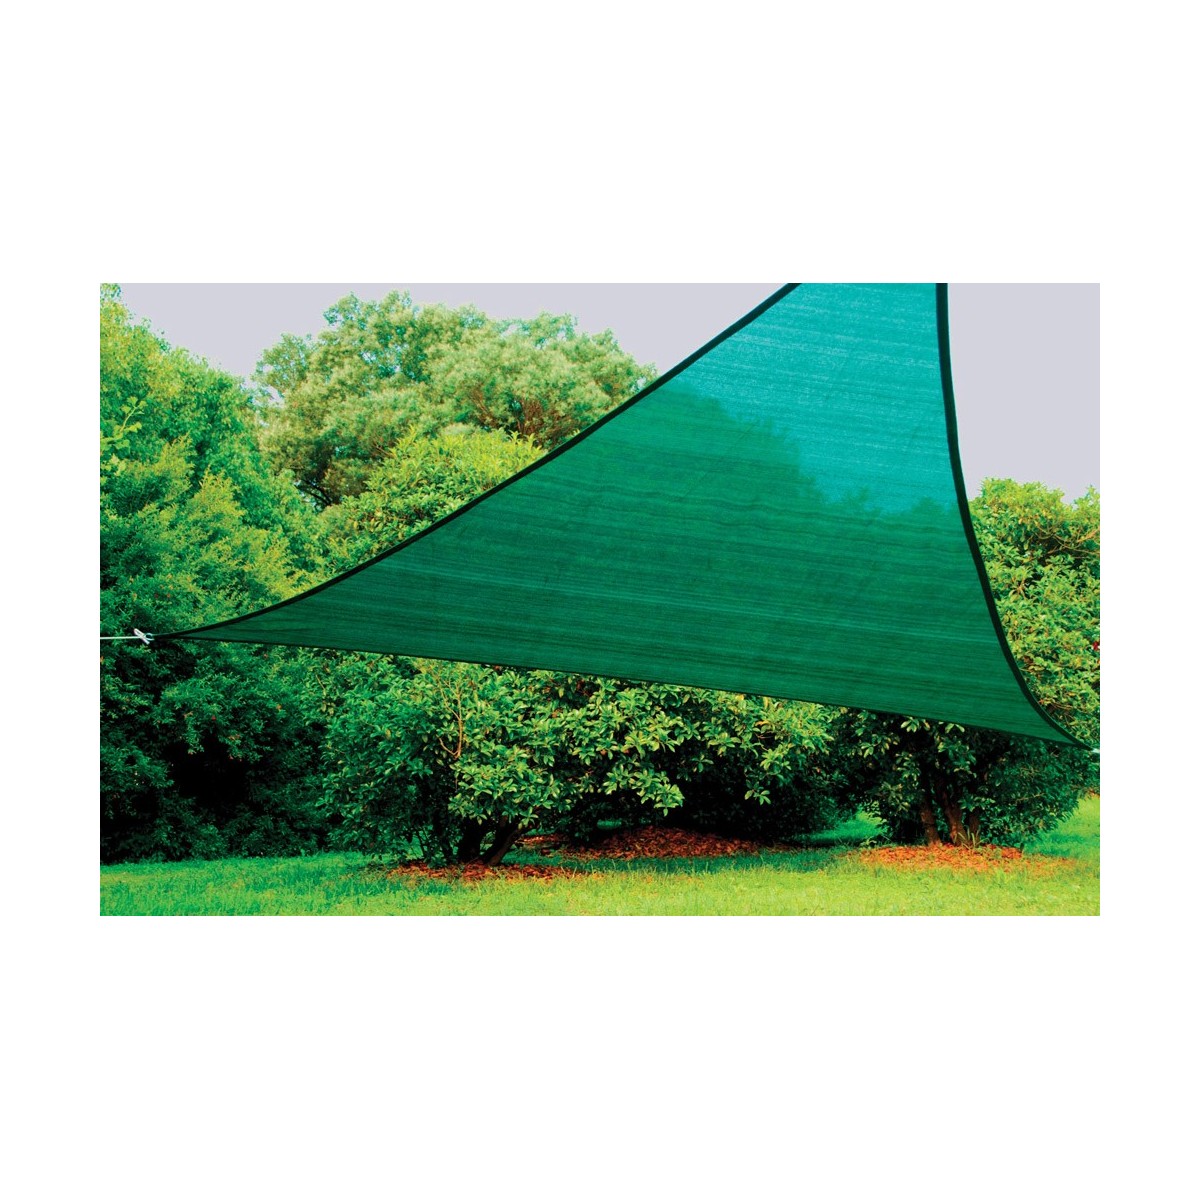 Vela 5x5 Triangolare Telo Ombreggiante Verde Giardino Ombra Tenda